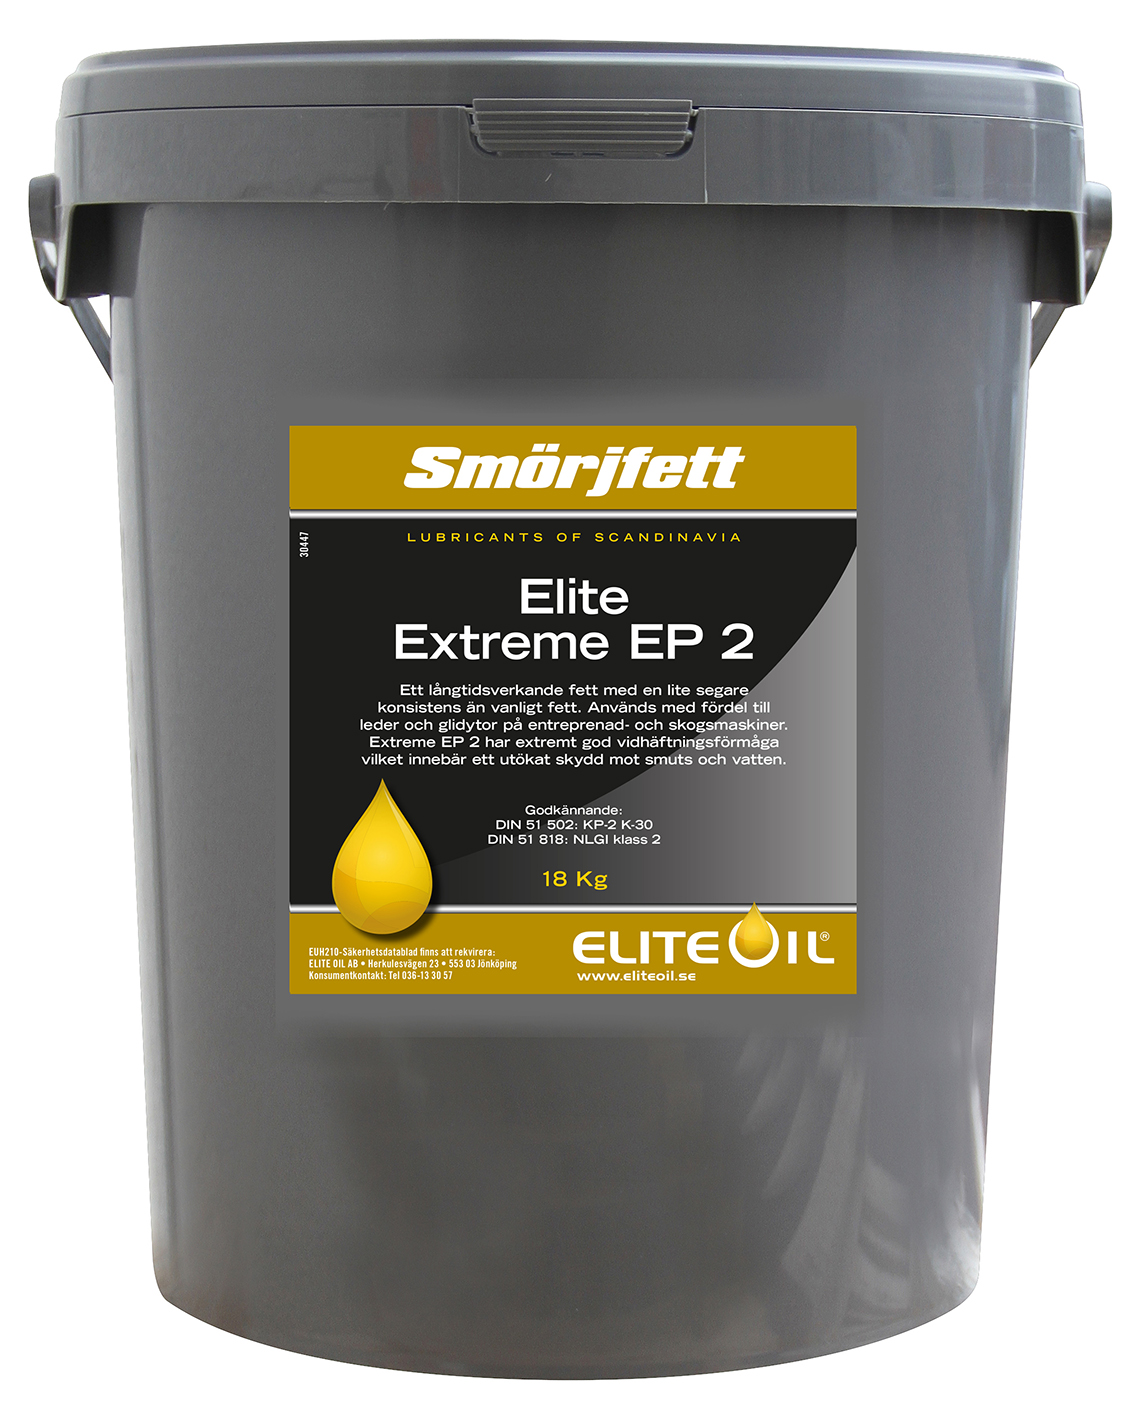 Elite Extreme EP 2, 18 kg hink-image